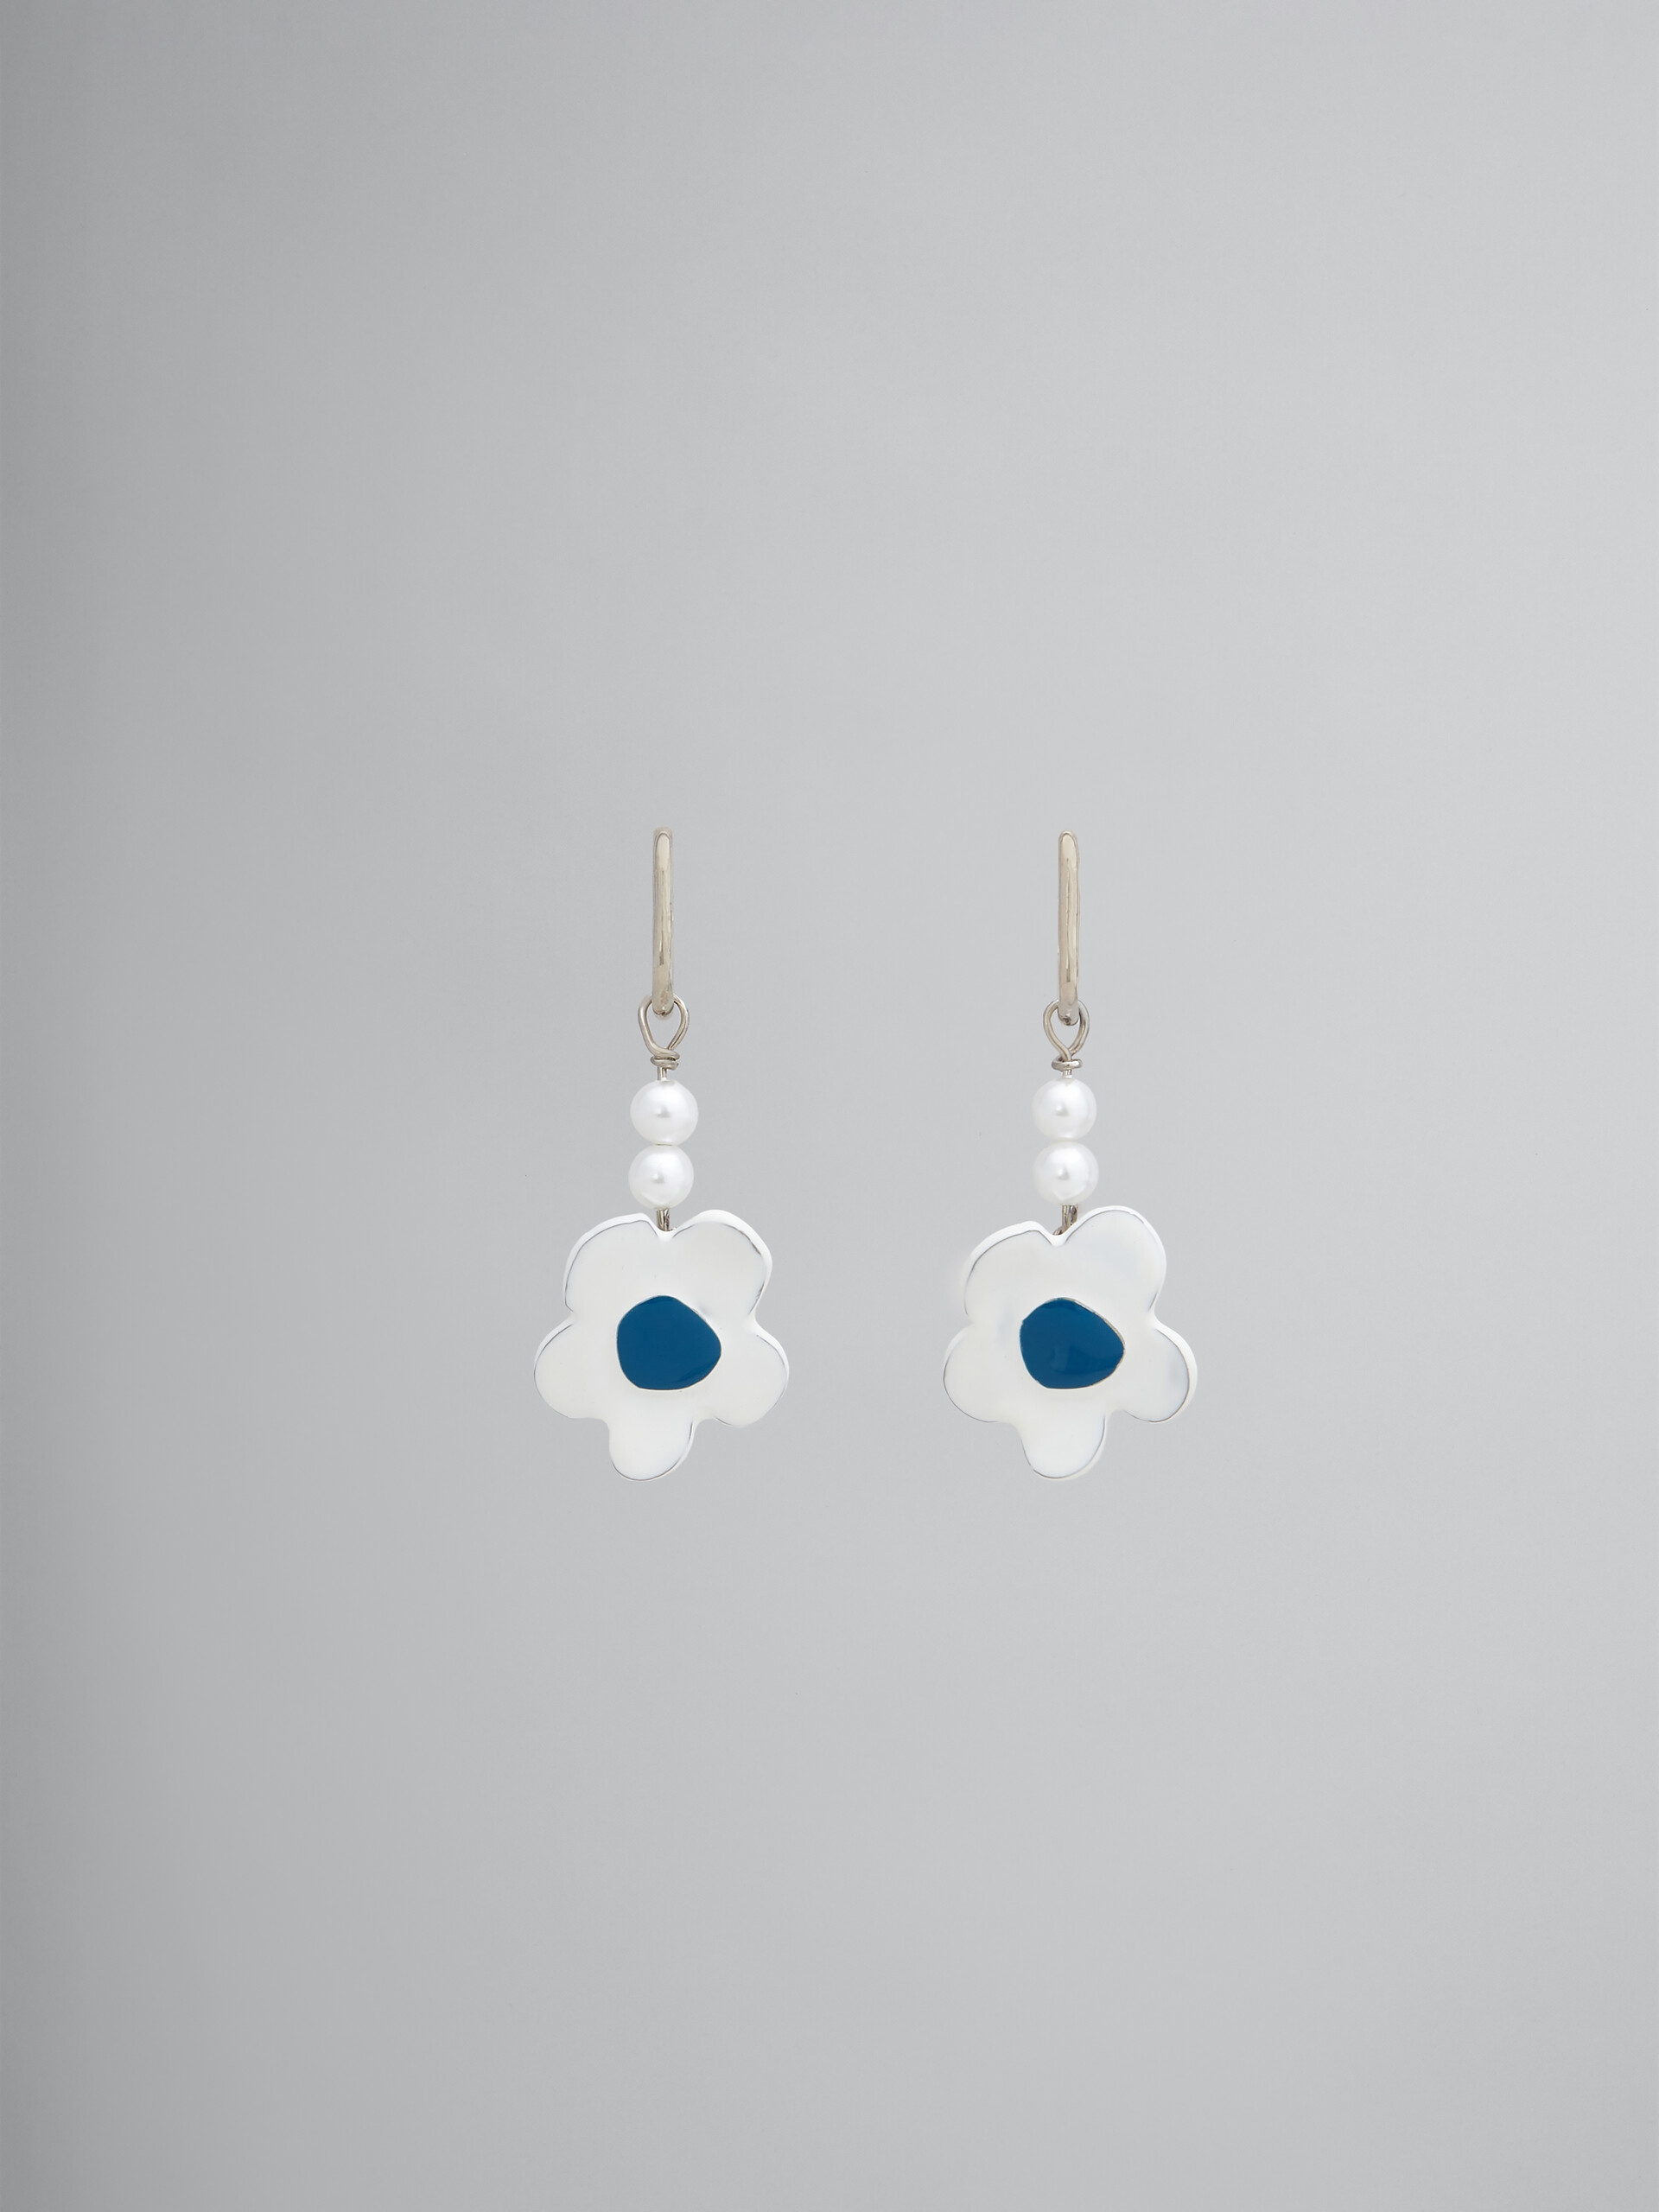 White floral earrings - Earrings - Image 1